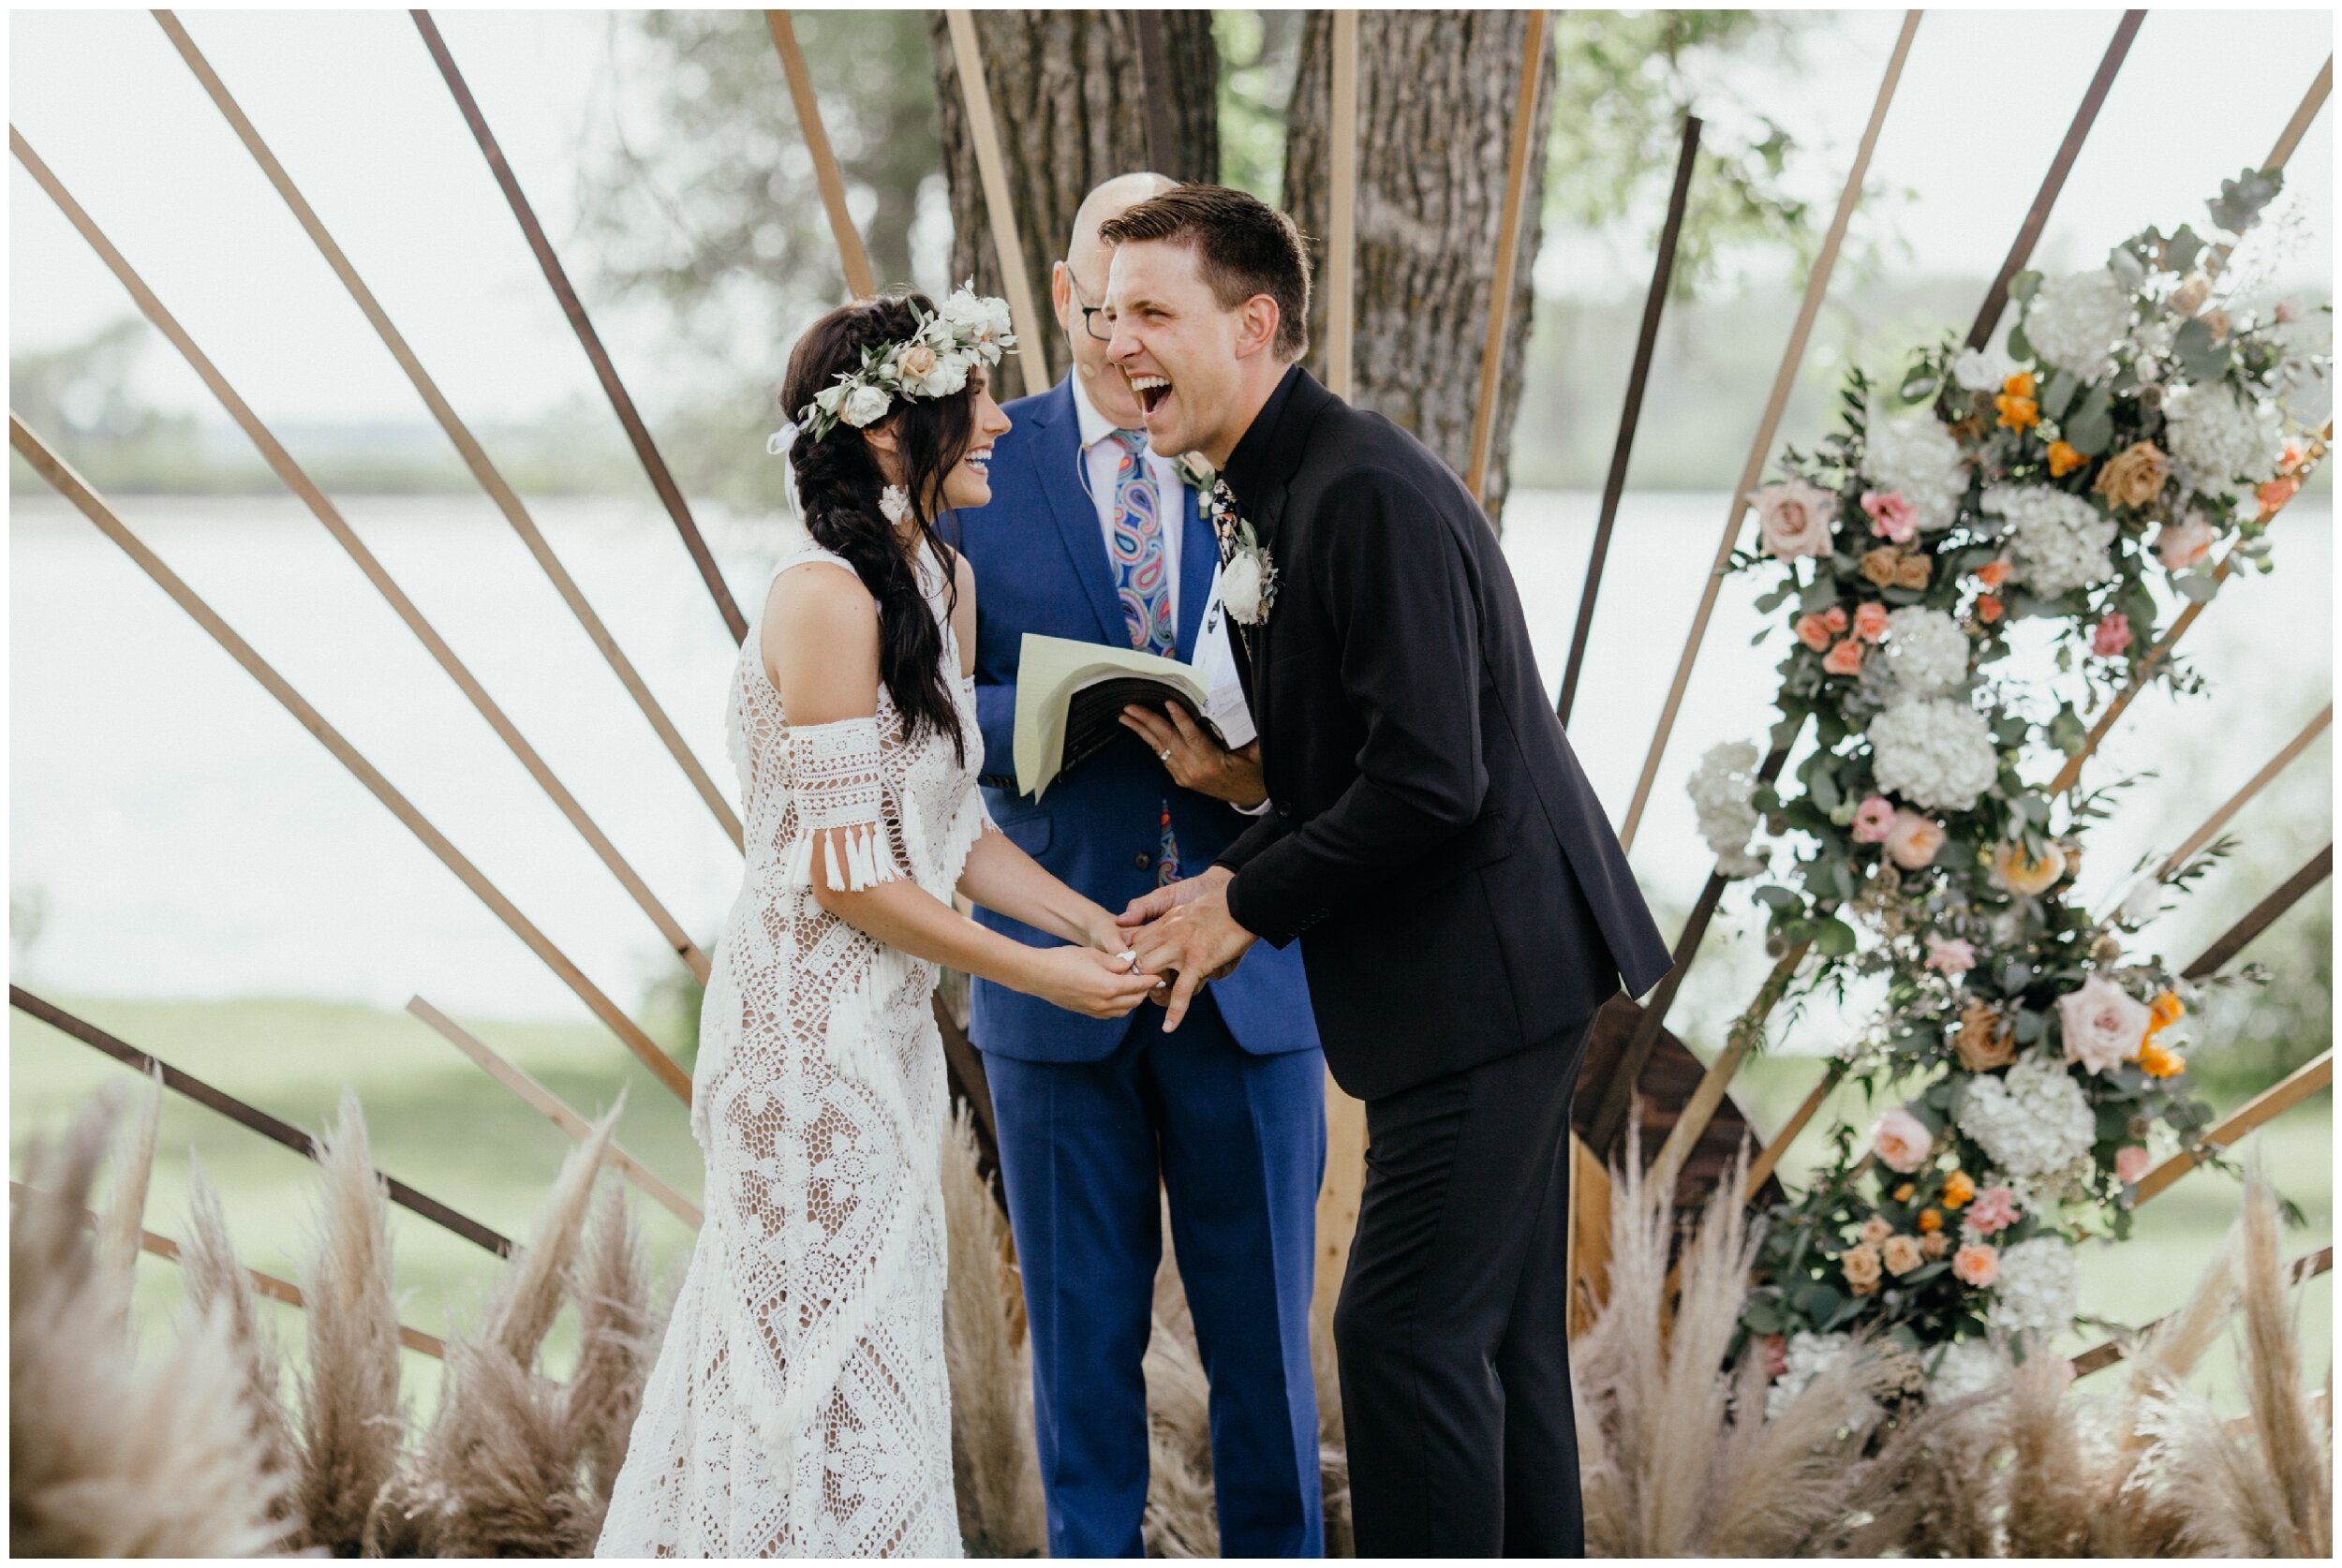 Bride and groom exchanging rings during Minnesota backyard summer wedding